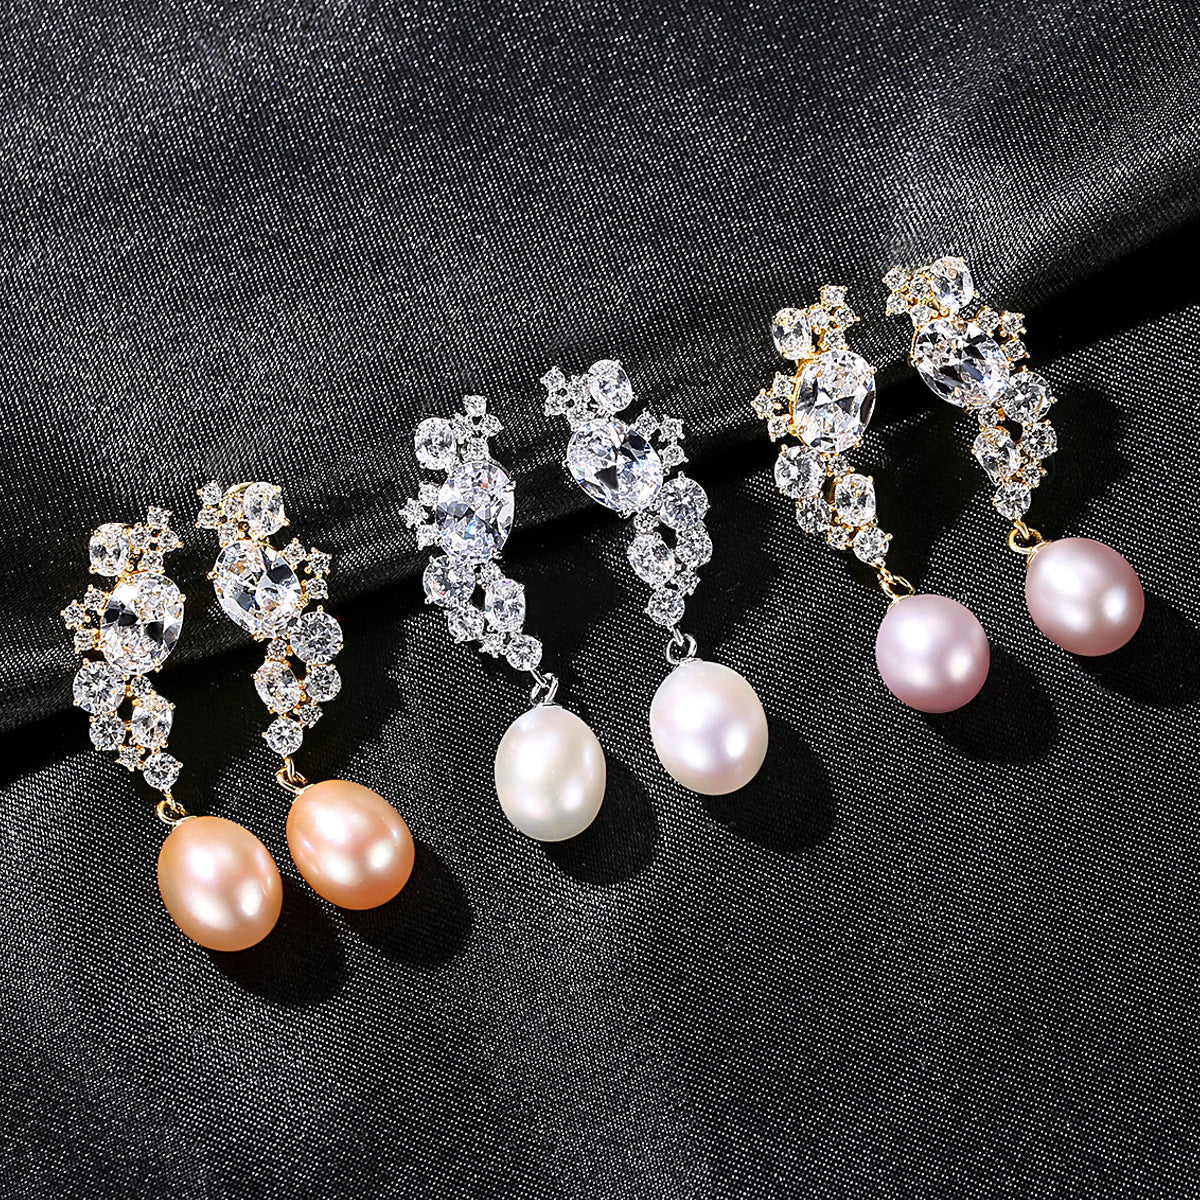 Antique Pearl Drop Earrings - HERS